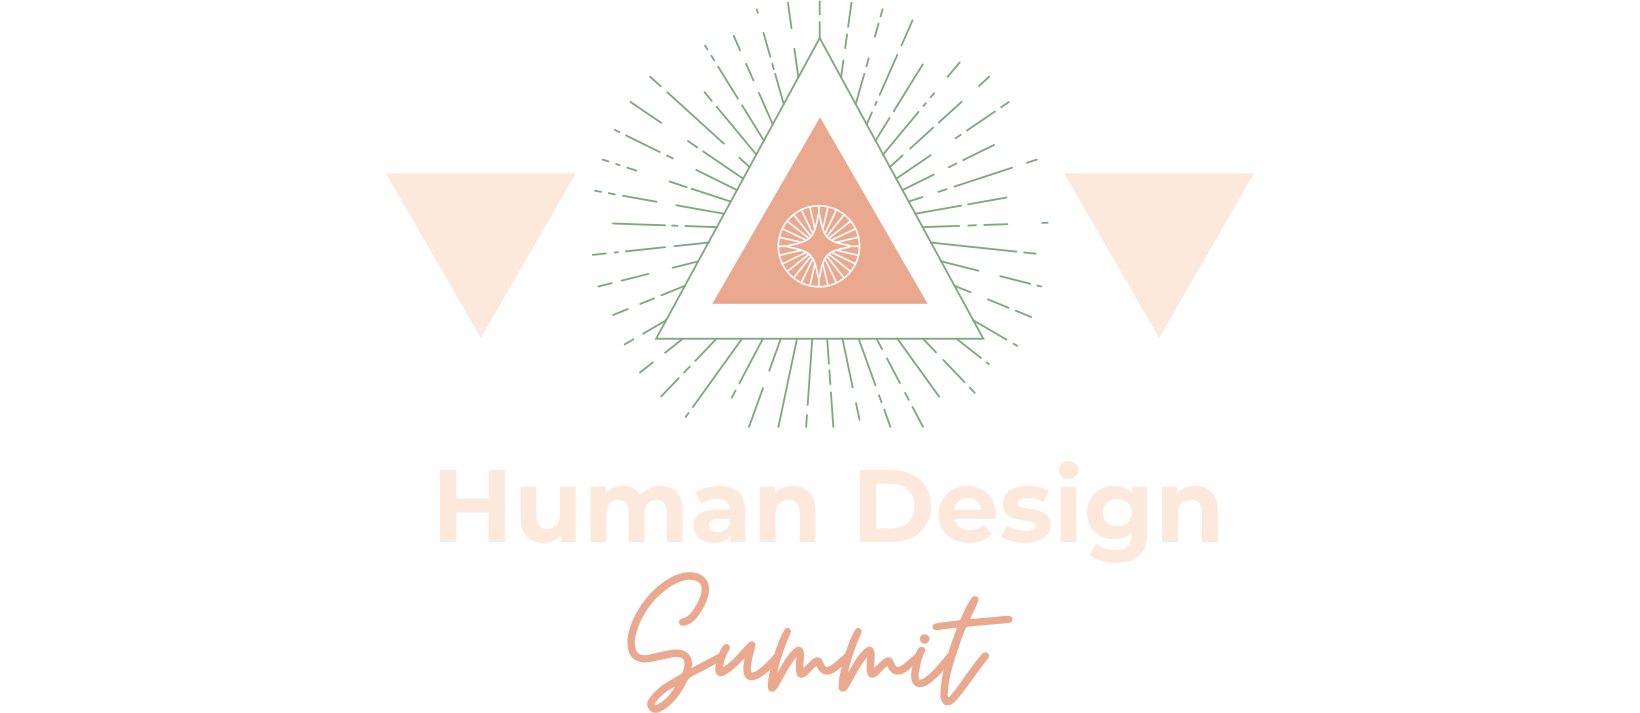 Human Design Summit